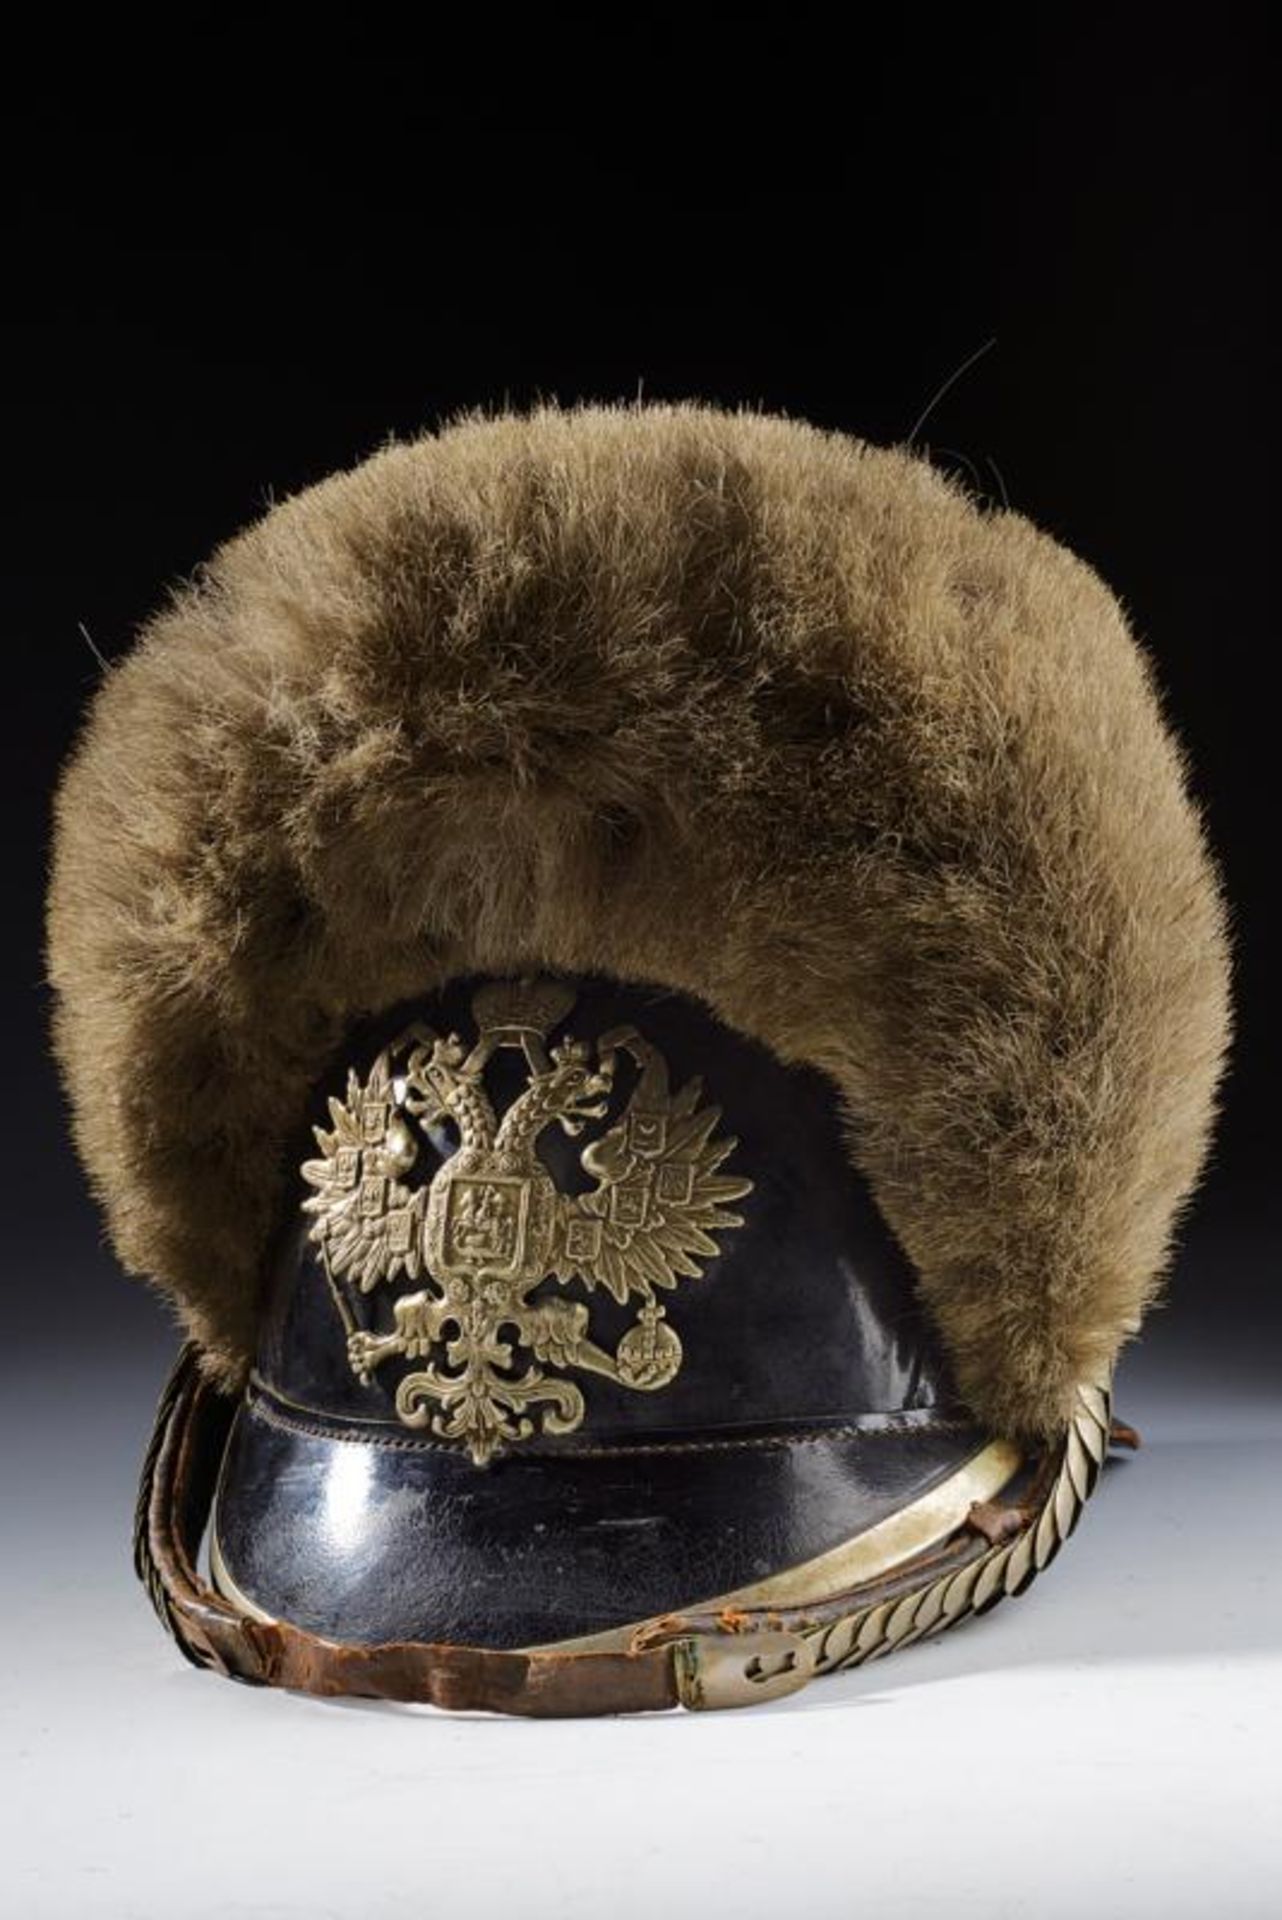 A dragoon parade helmet